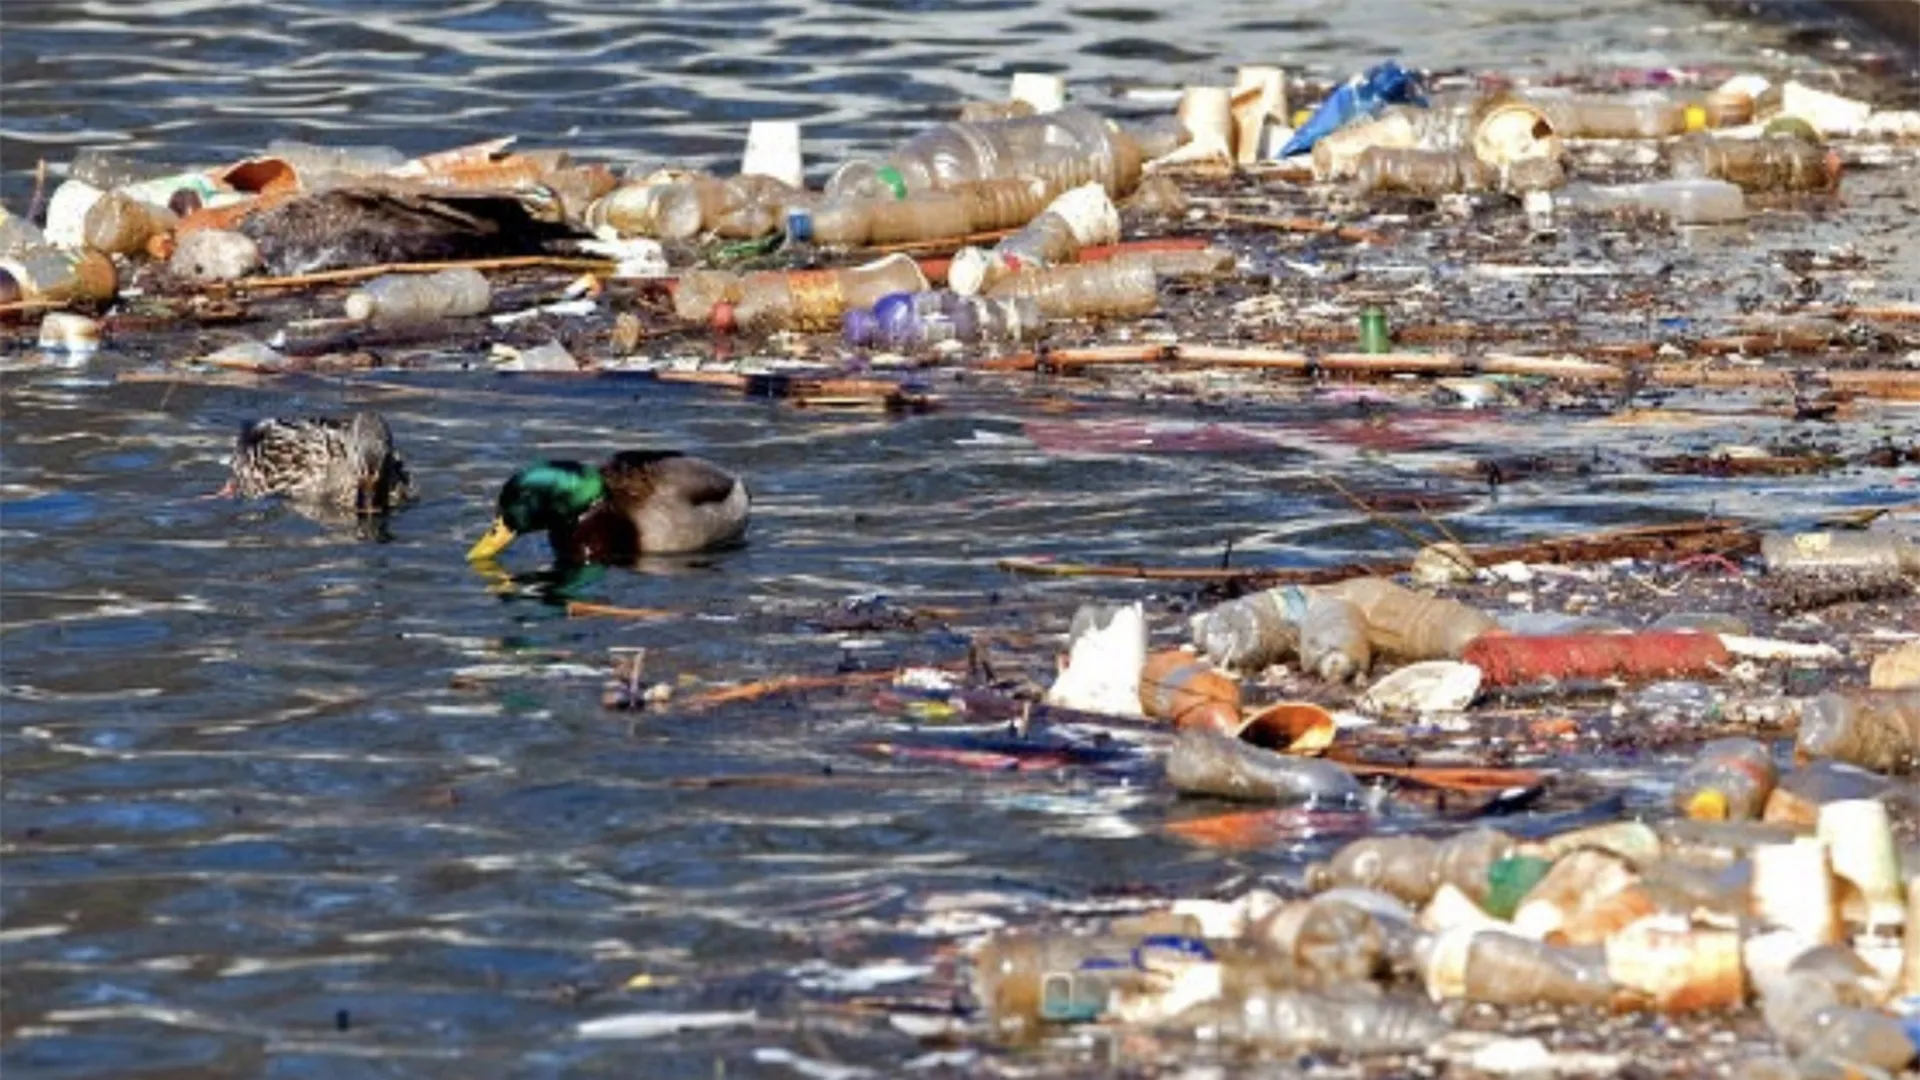 New York sues PepsiCo over plastic pollution along river